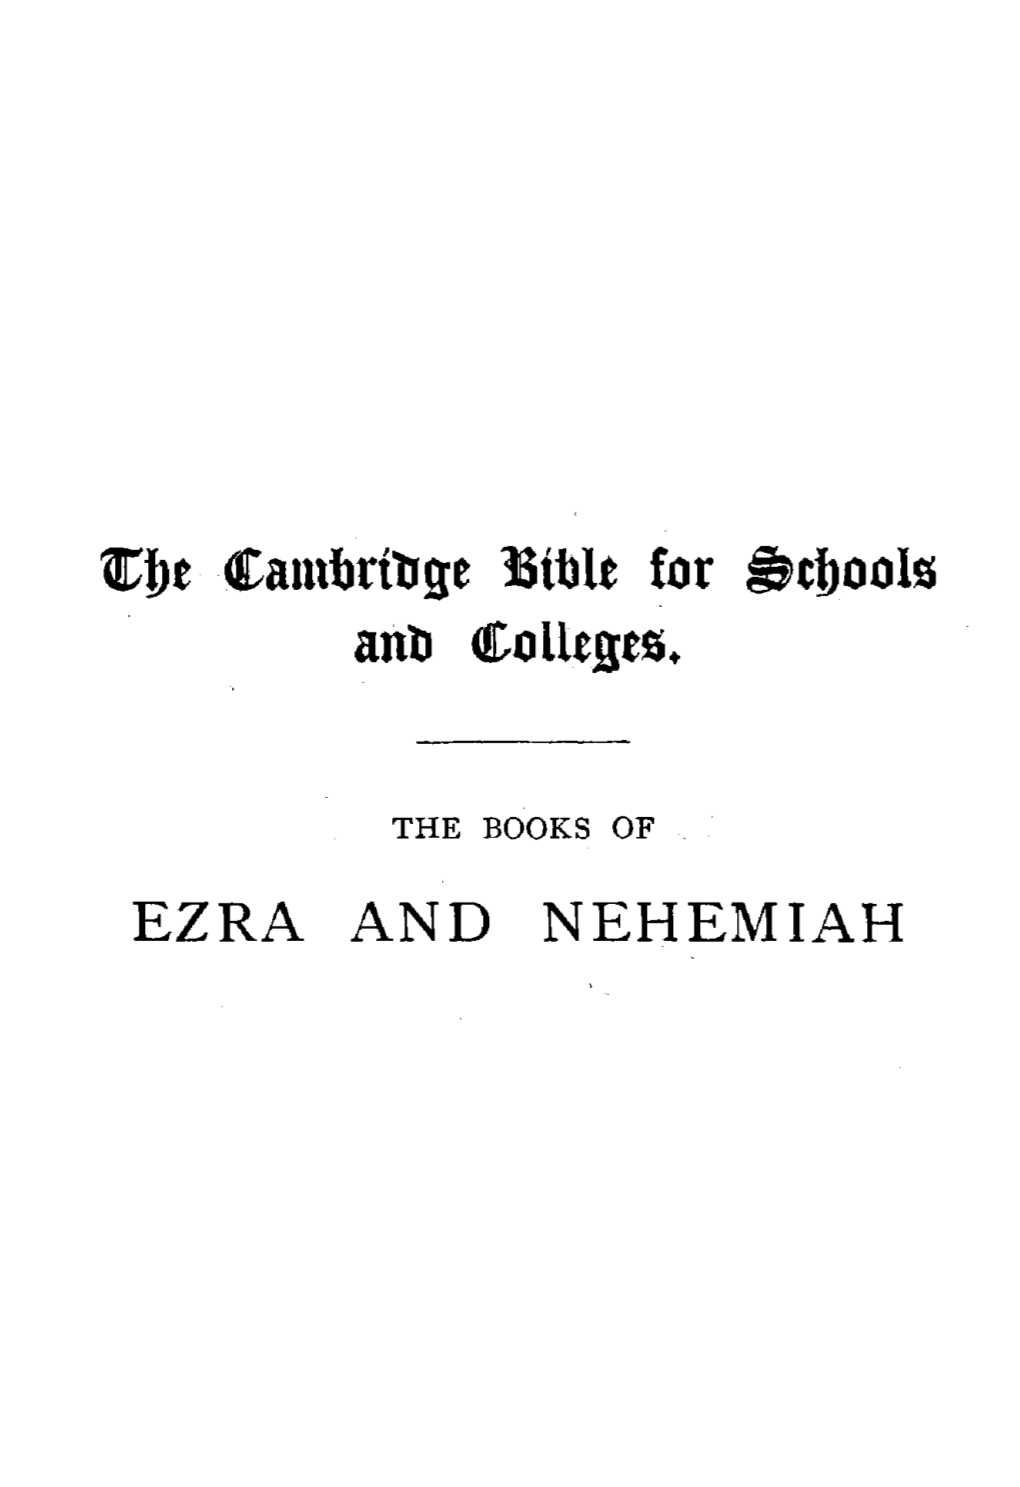 EZRA and NEHEMIAH 1Lonbott: C